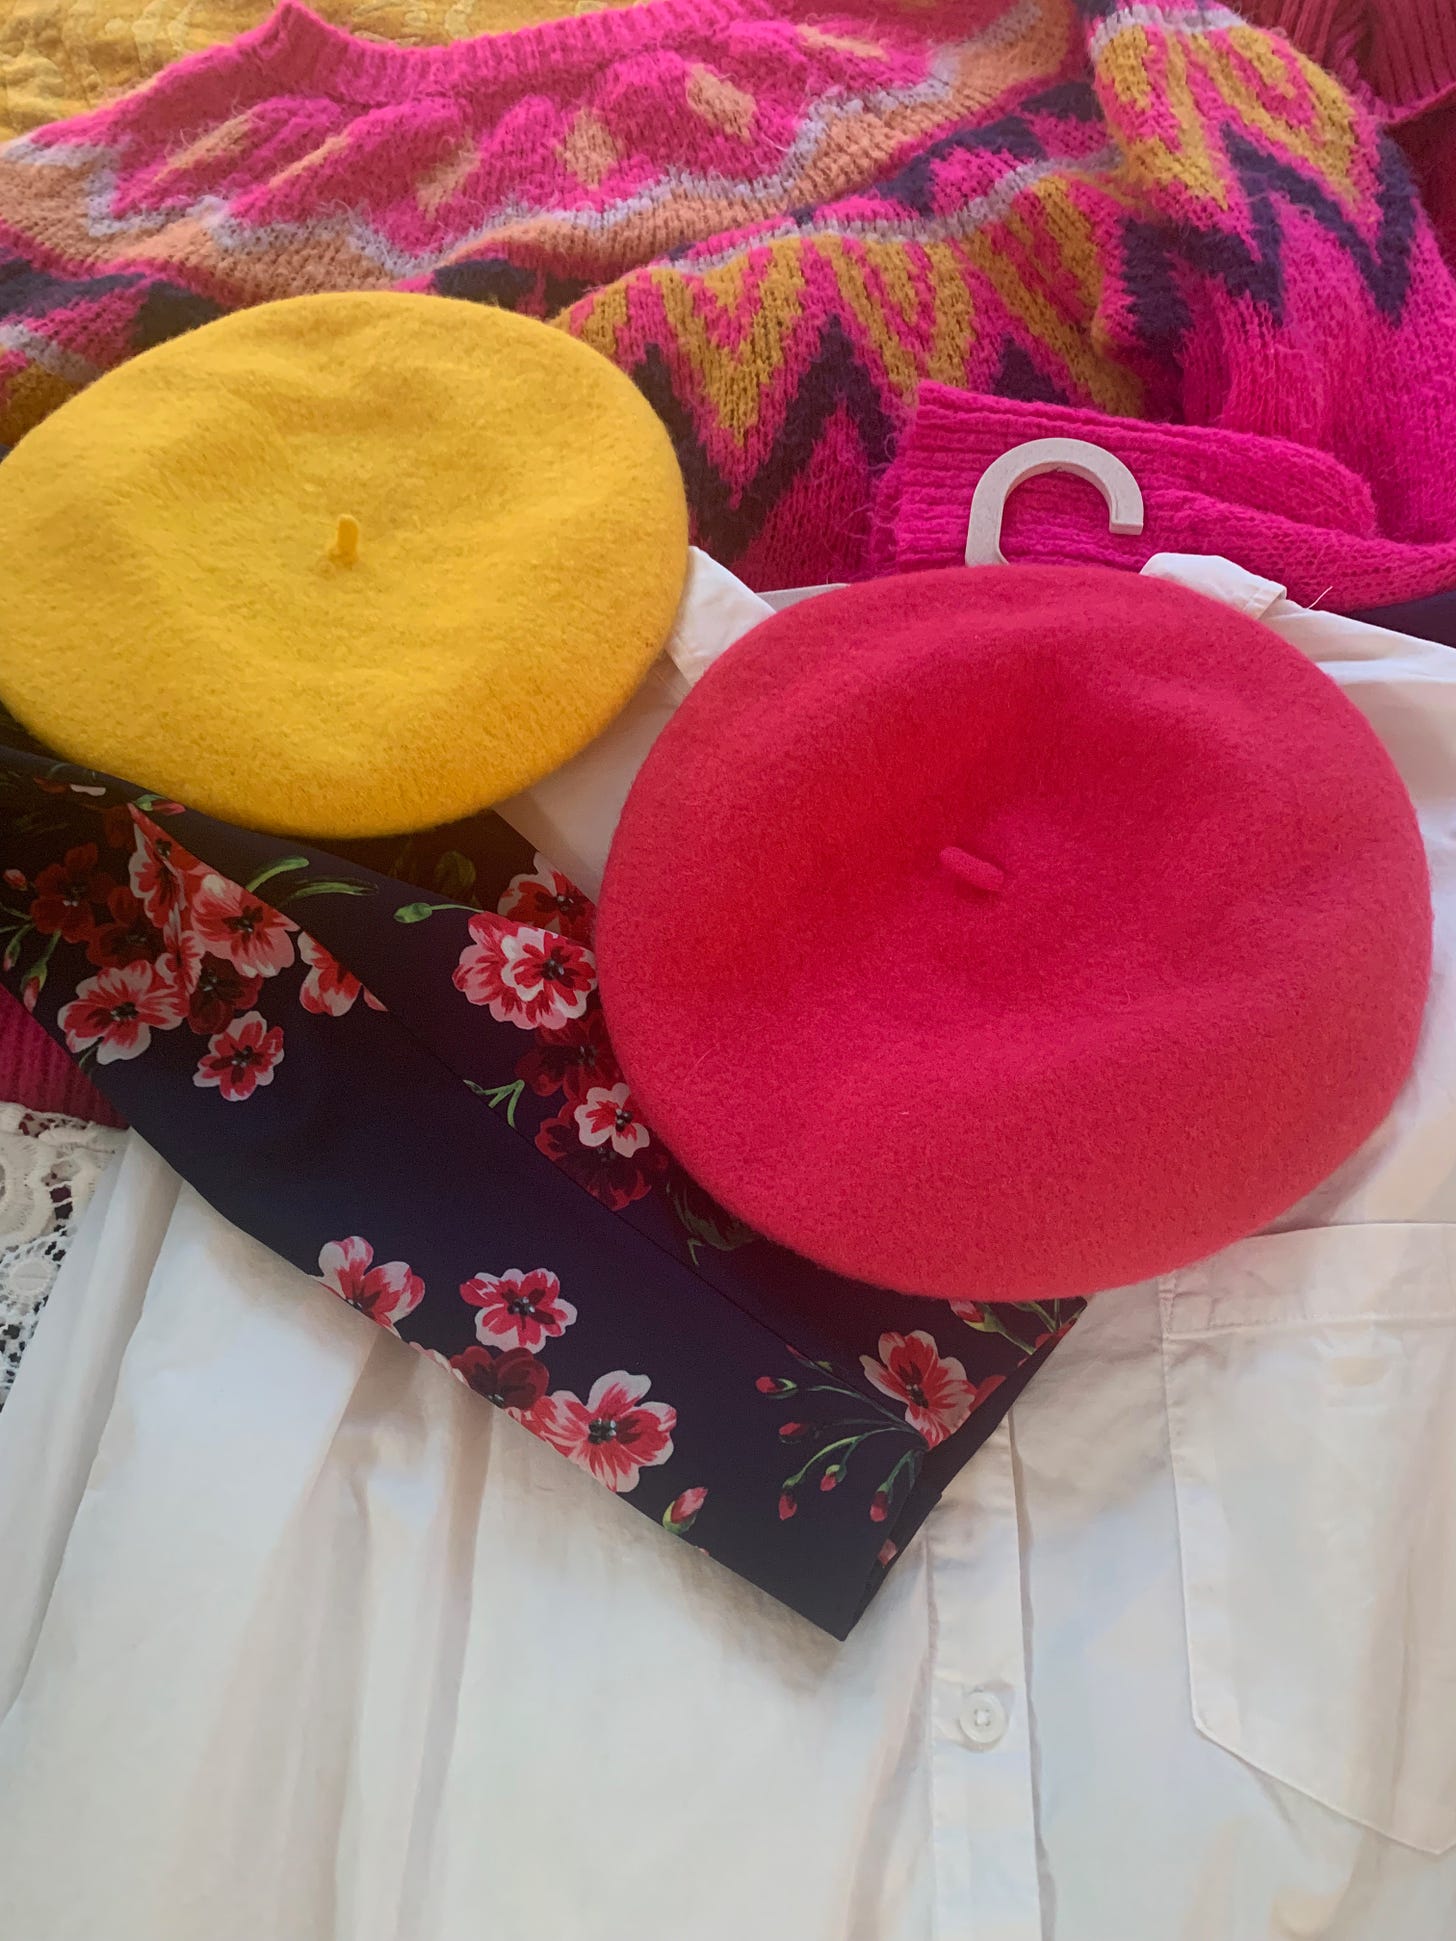 A mustard beret and a raspberry beret